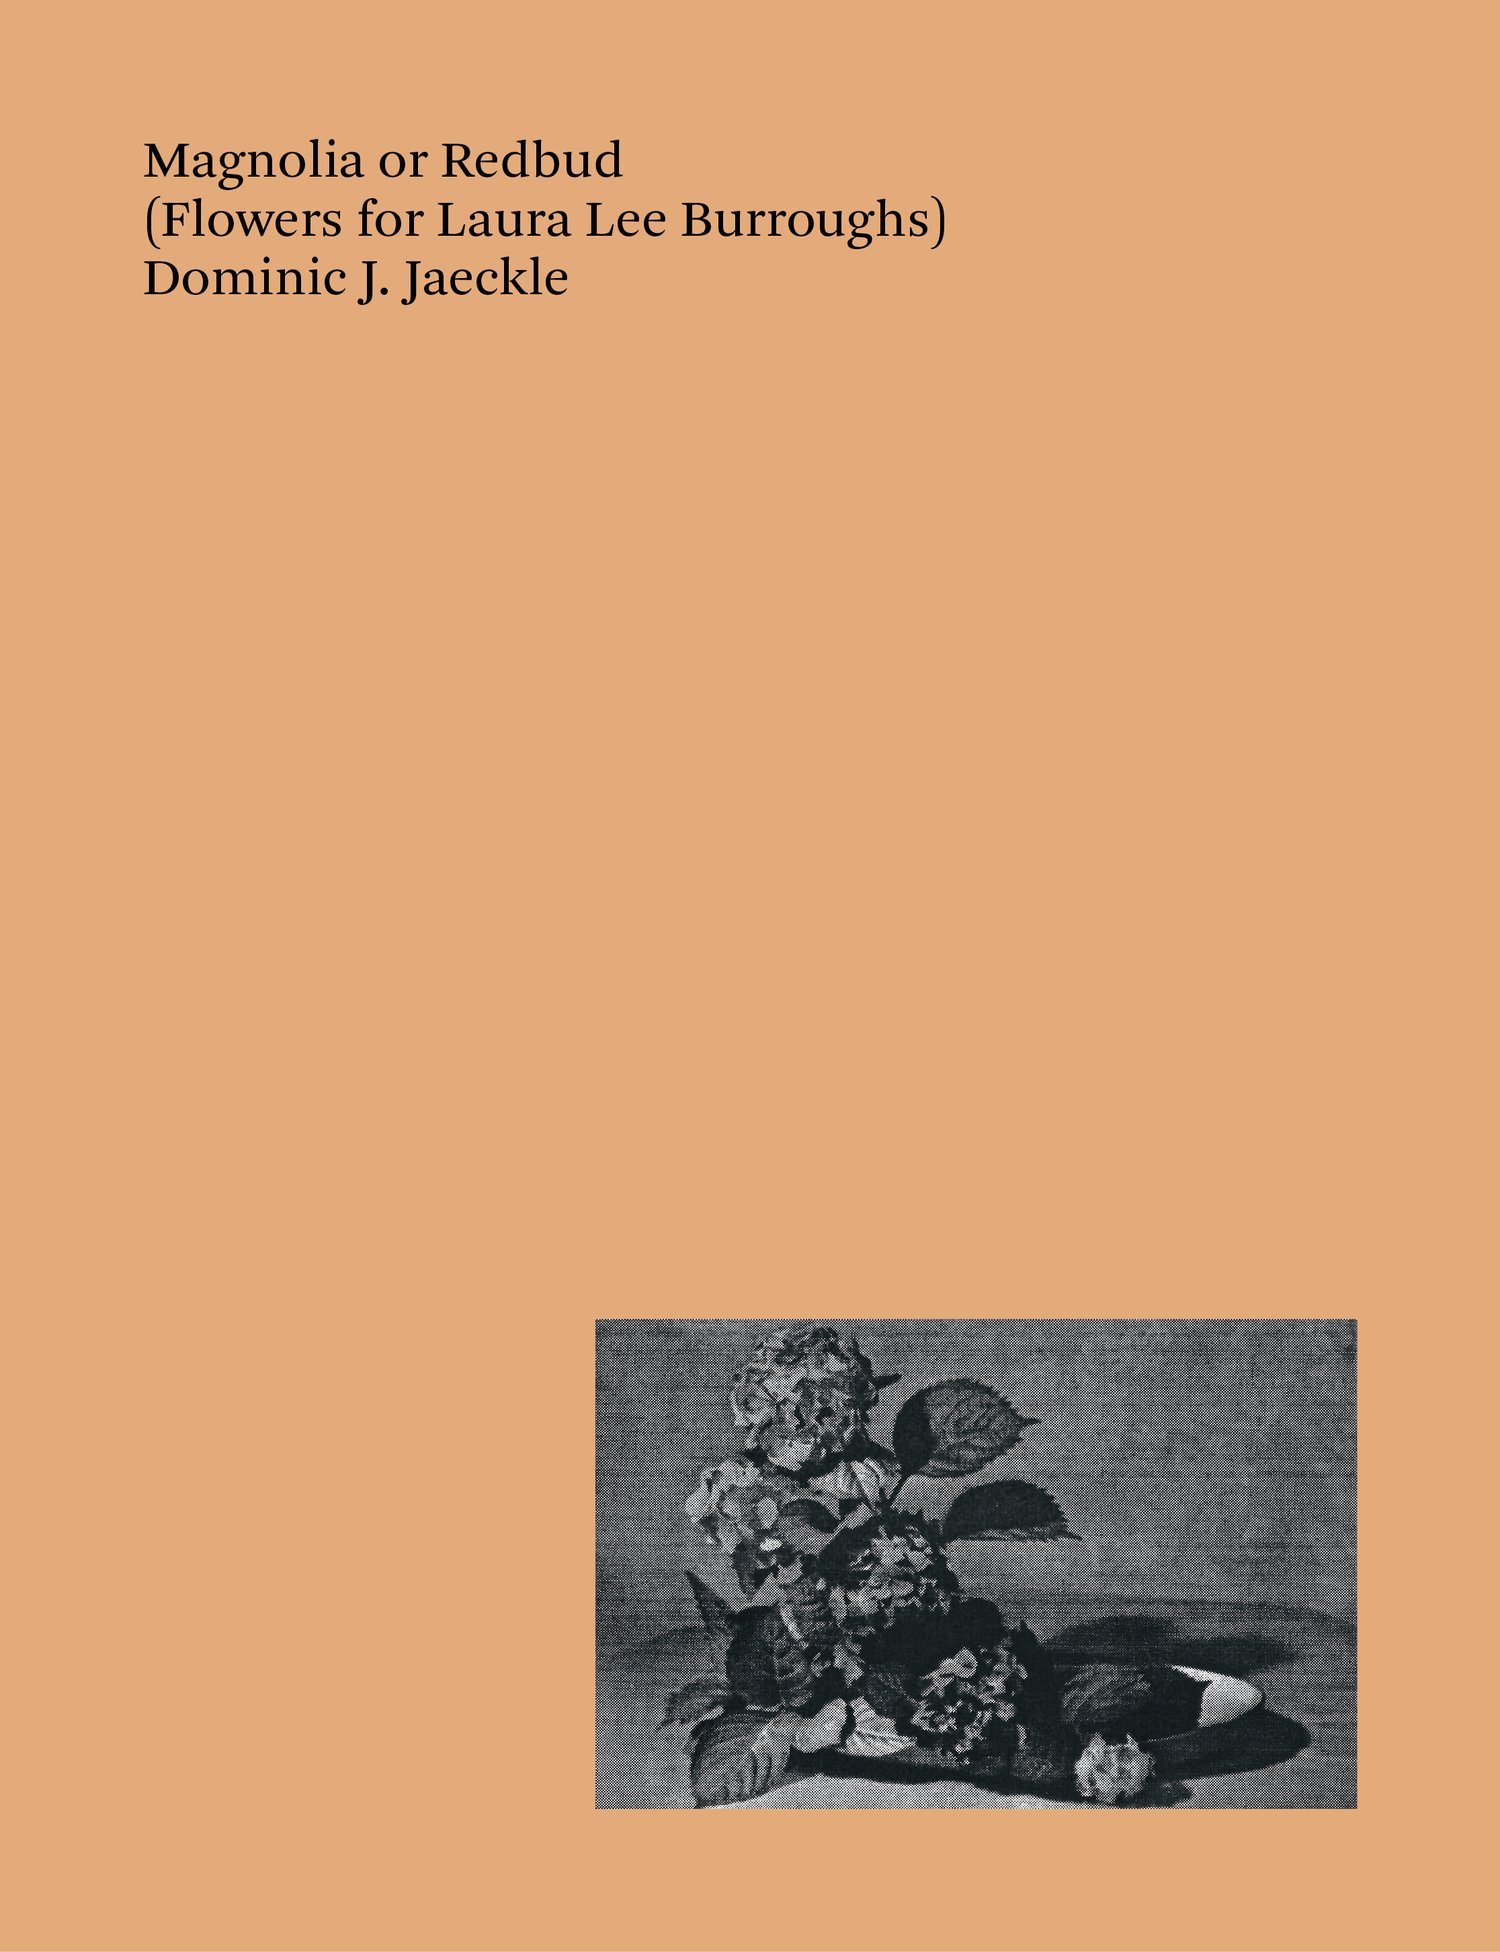 Preorder ‡ Dominic J. Jaeckle, Magnolia or Redbud (Flowers for Laura Lee Burroughs)